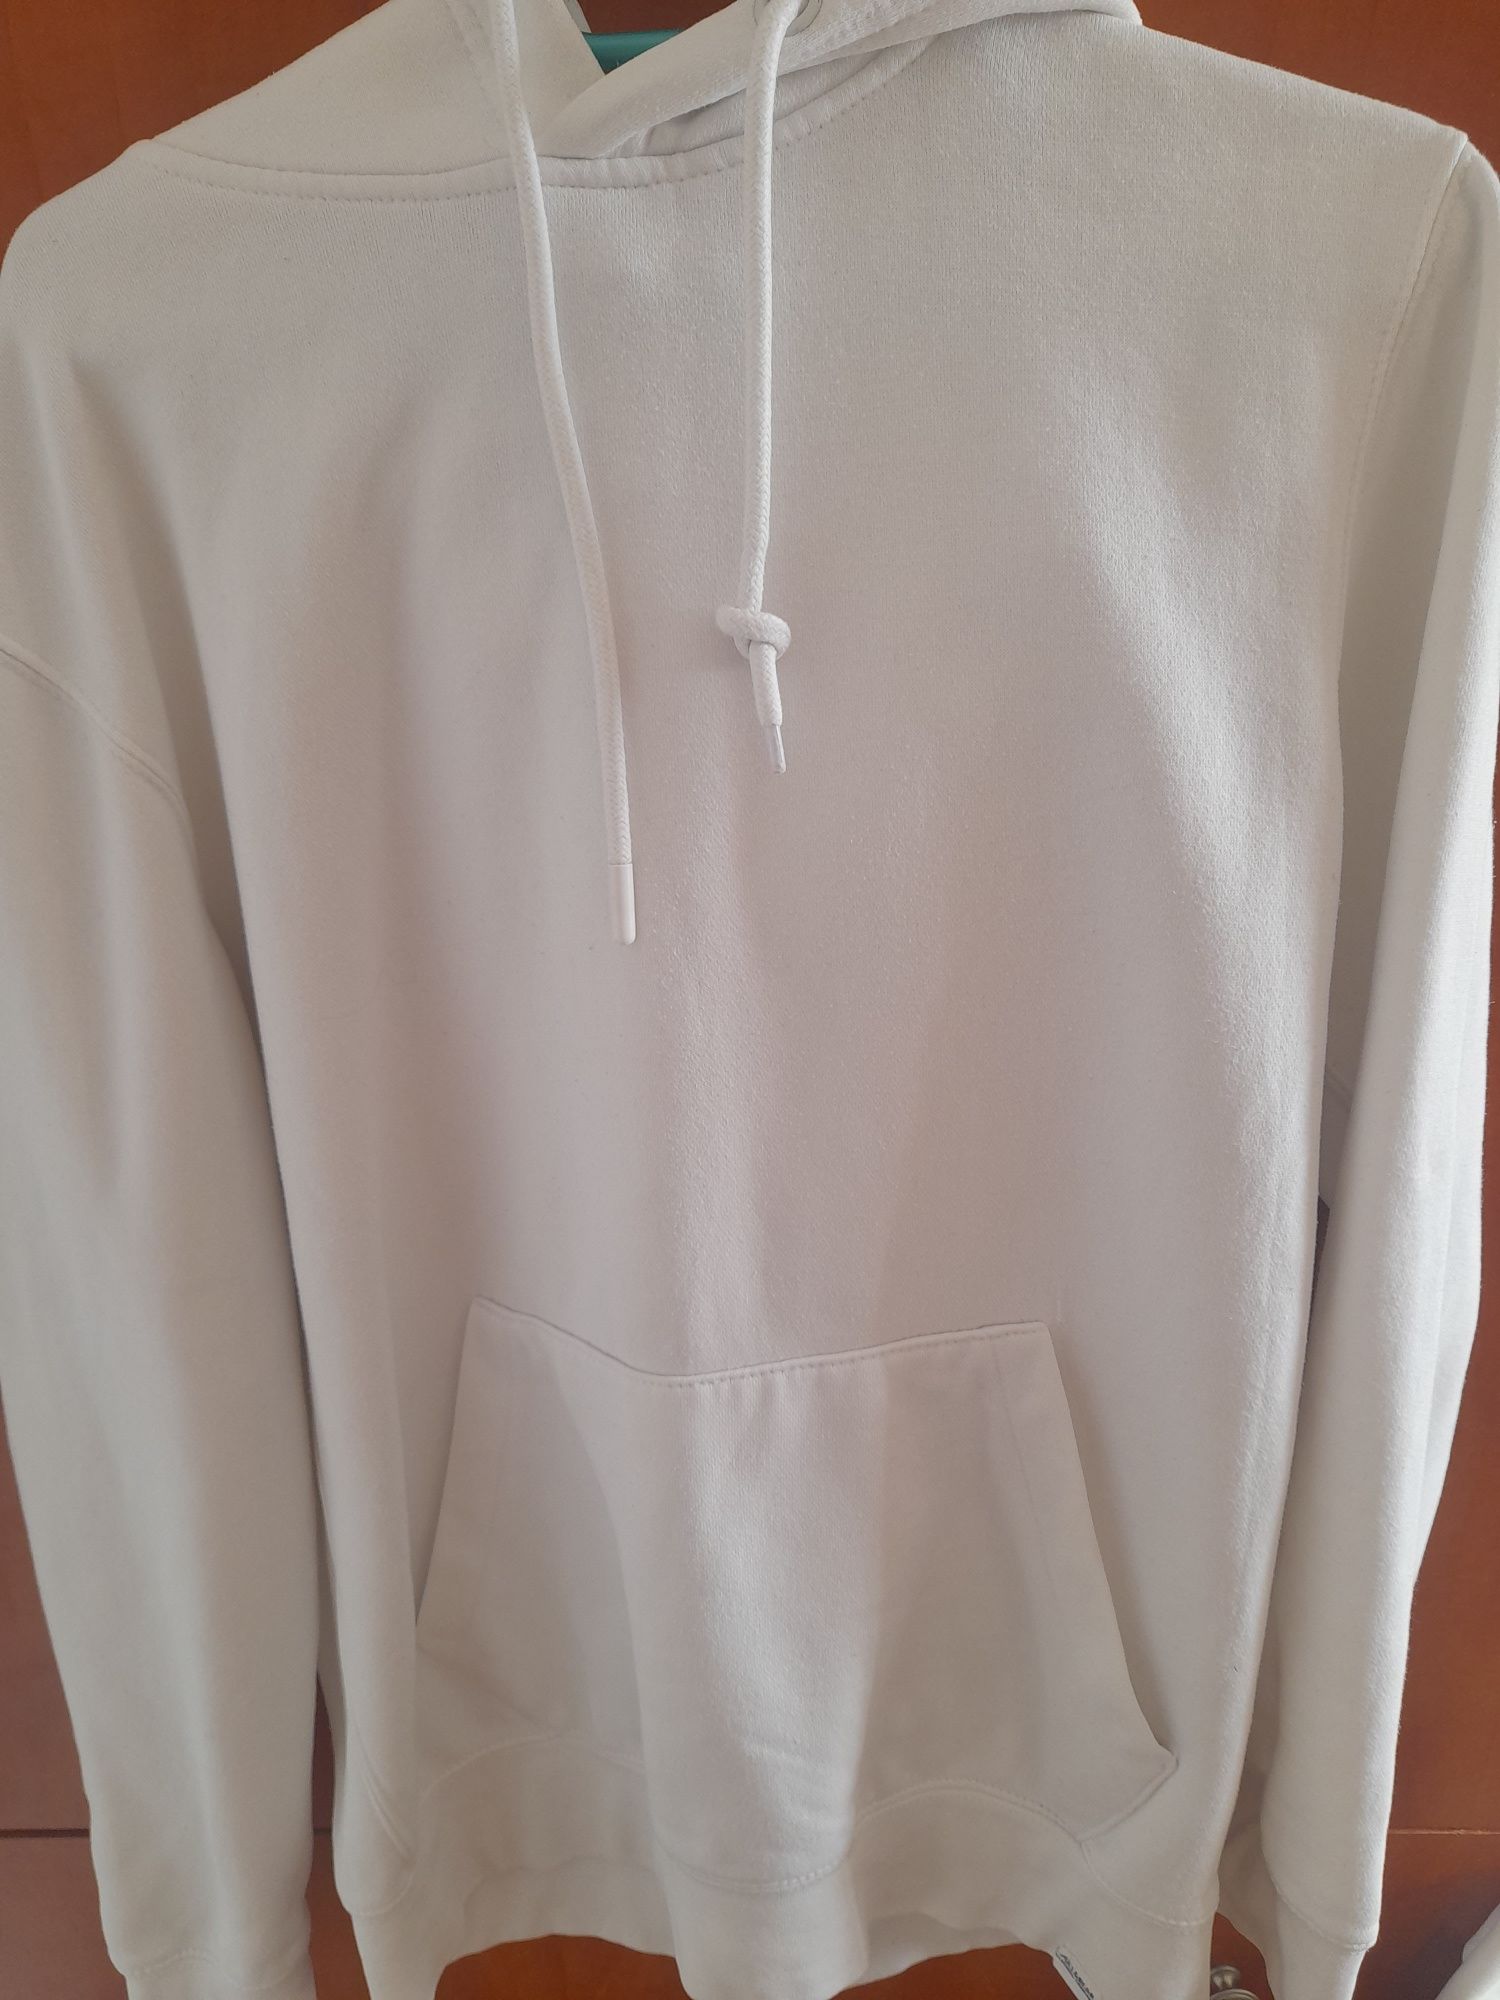 Hanorac alb zara&pull&beat-hoodie alb nike jordan adidas bluza alba